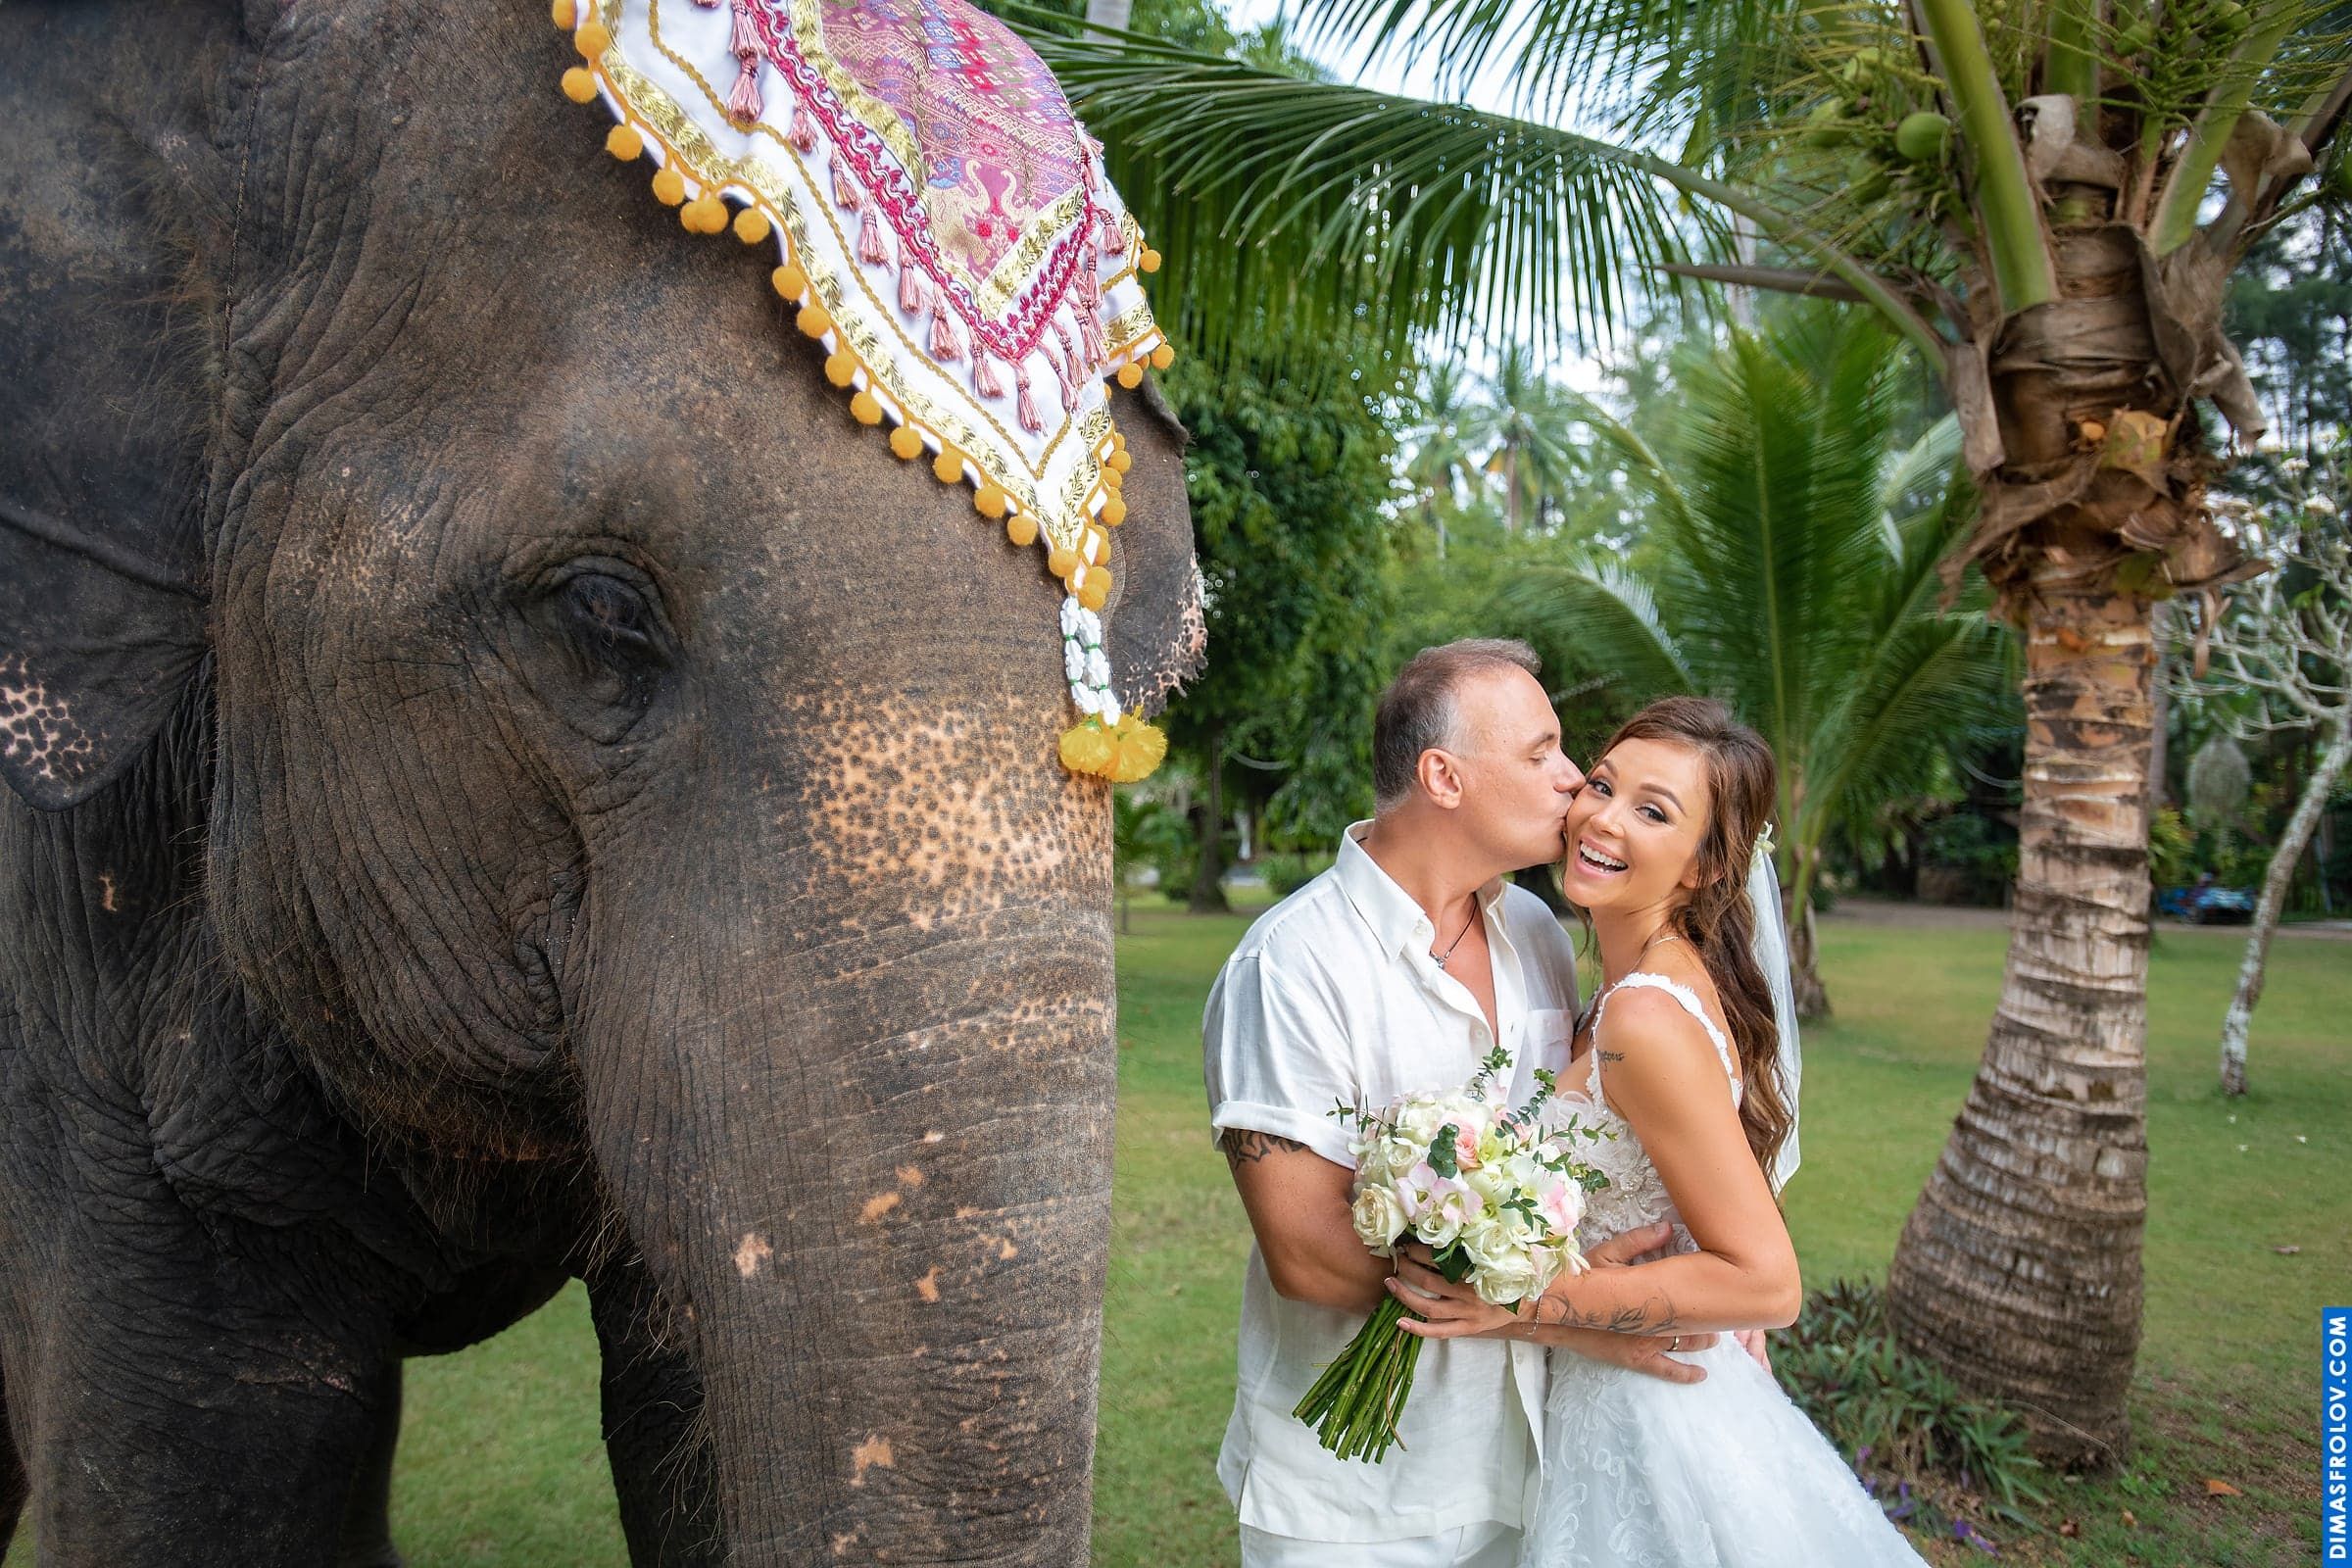 Photo shoot with an elephant on Koh Samui. photographer Dimas Frolov. photo1732